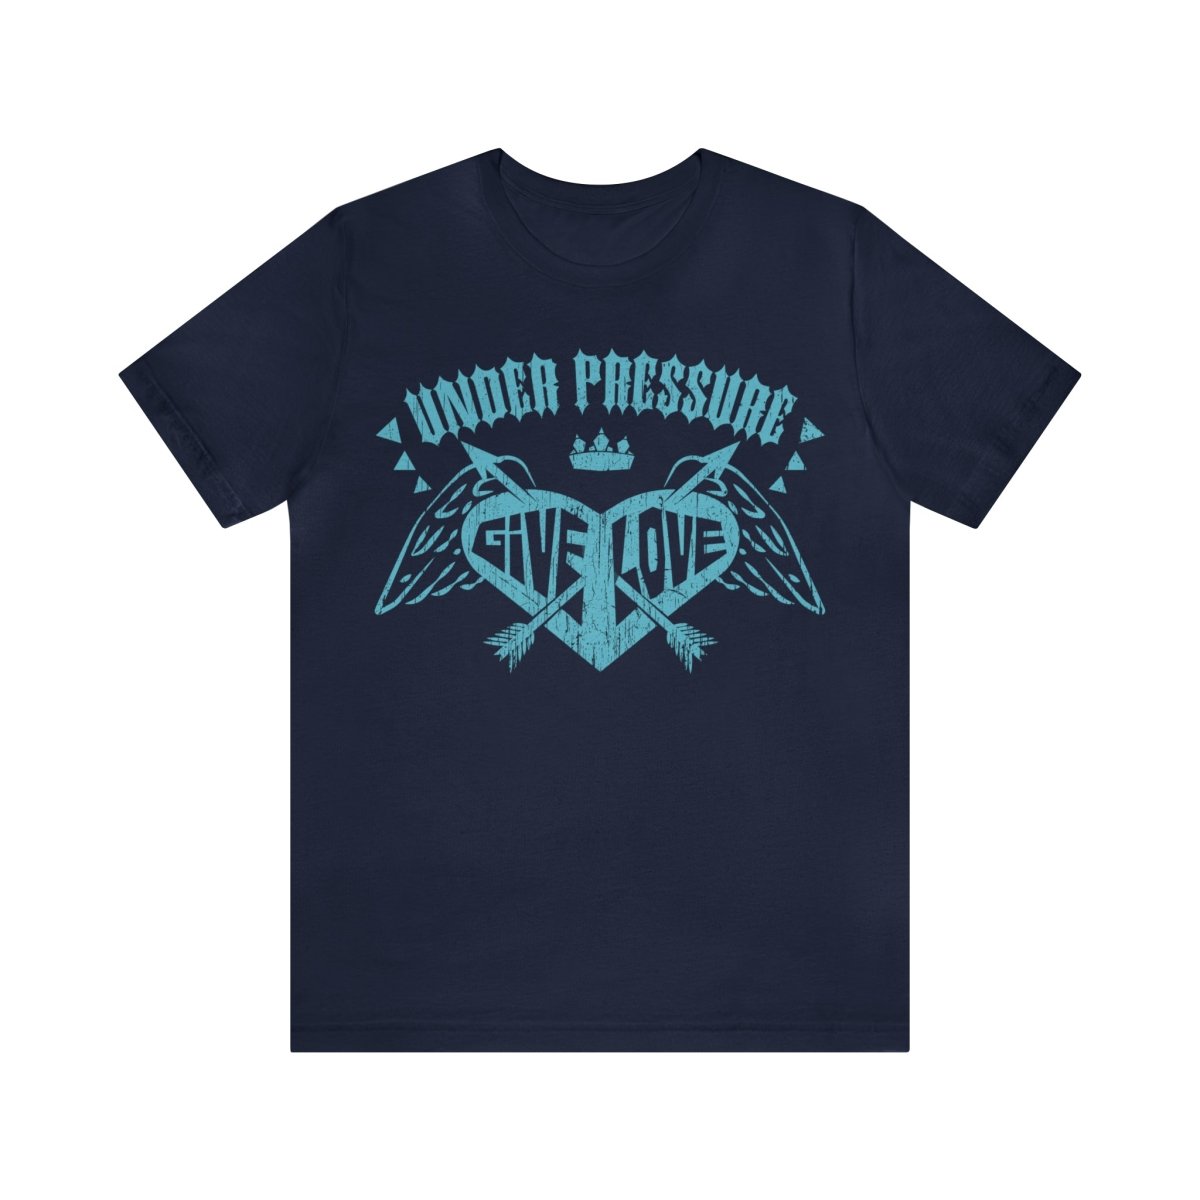 Give Love Premium T-Shirt, Under Pressure